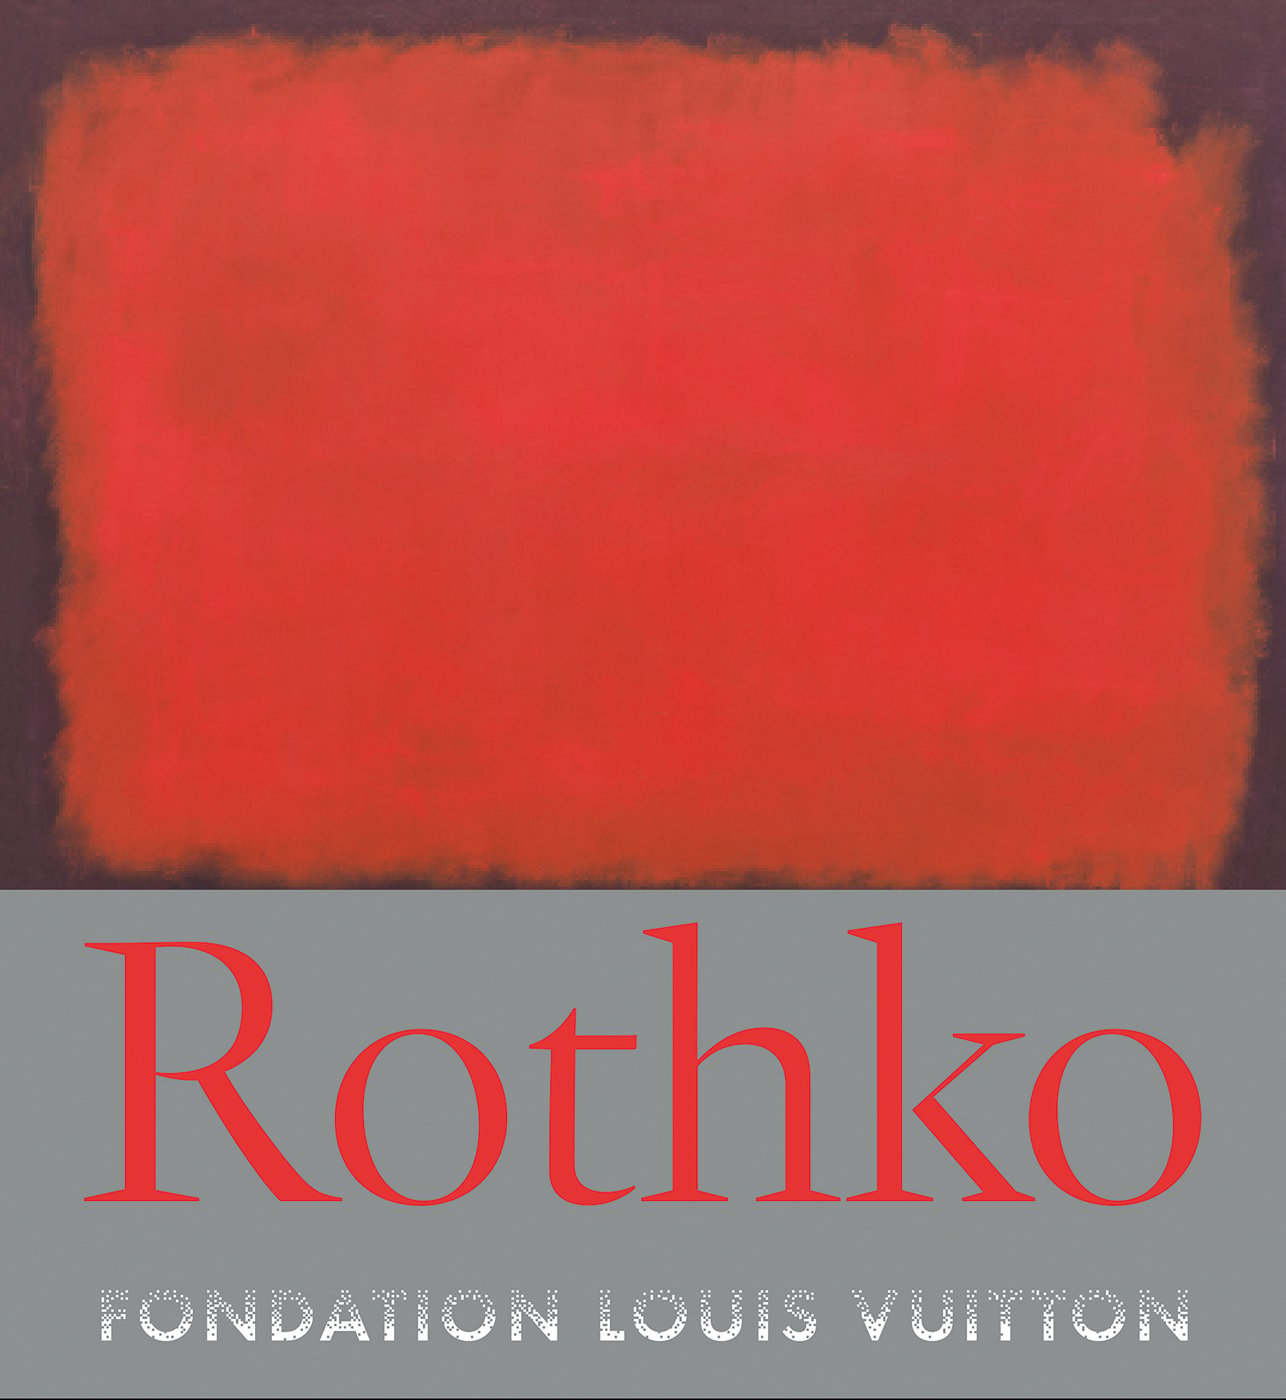 MARK ROTHKO - Retrospective Fondation Louis Vuitton